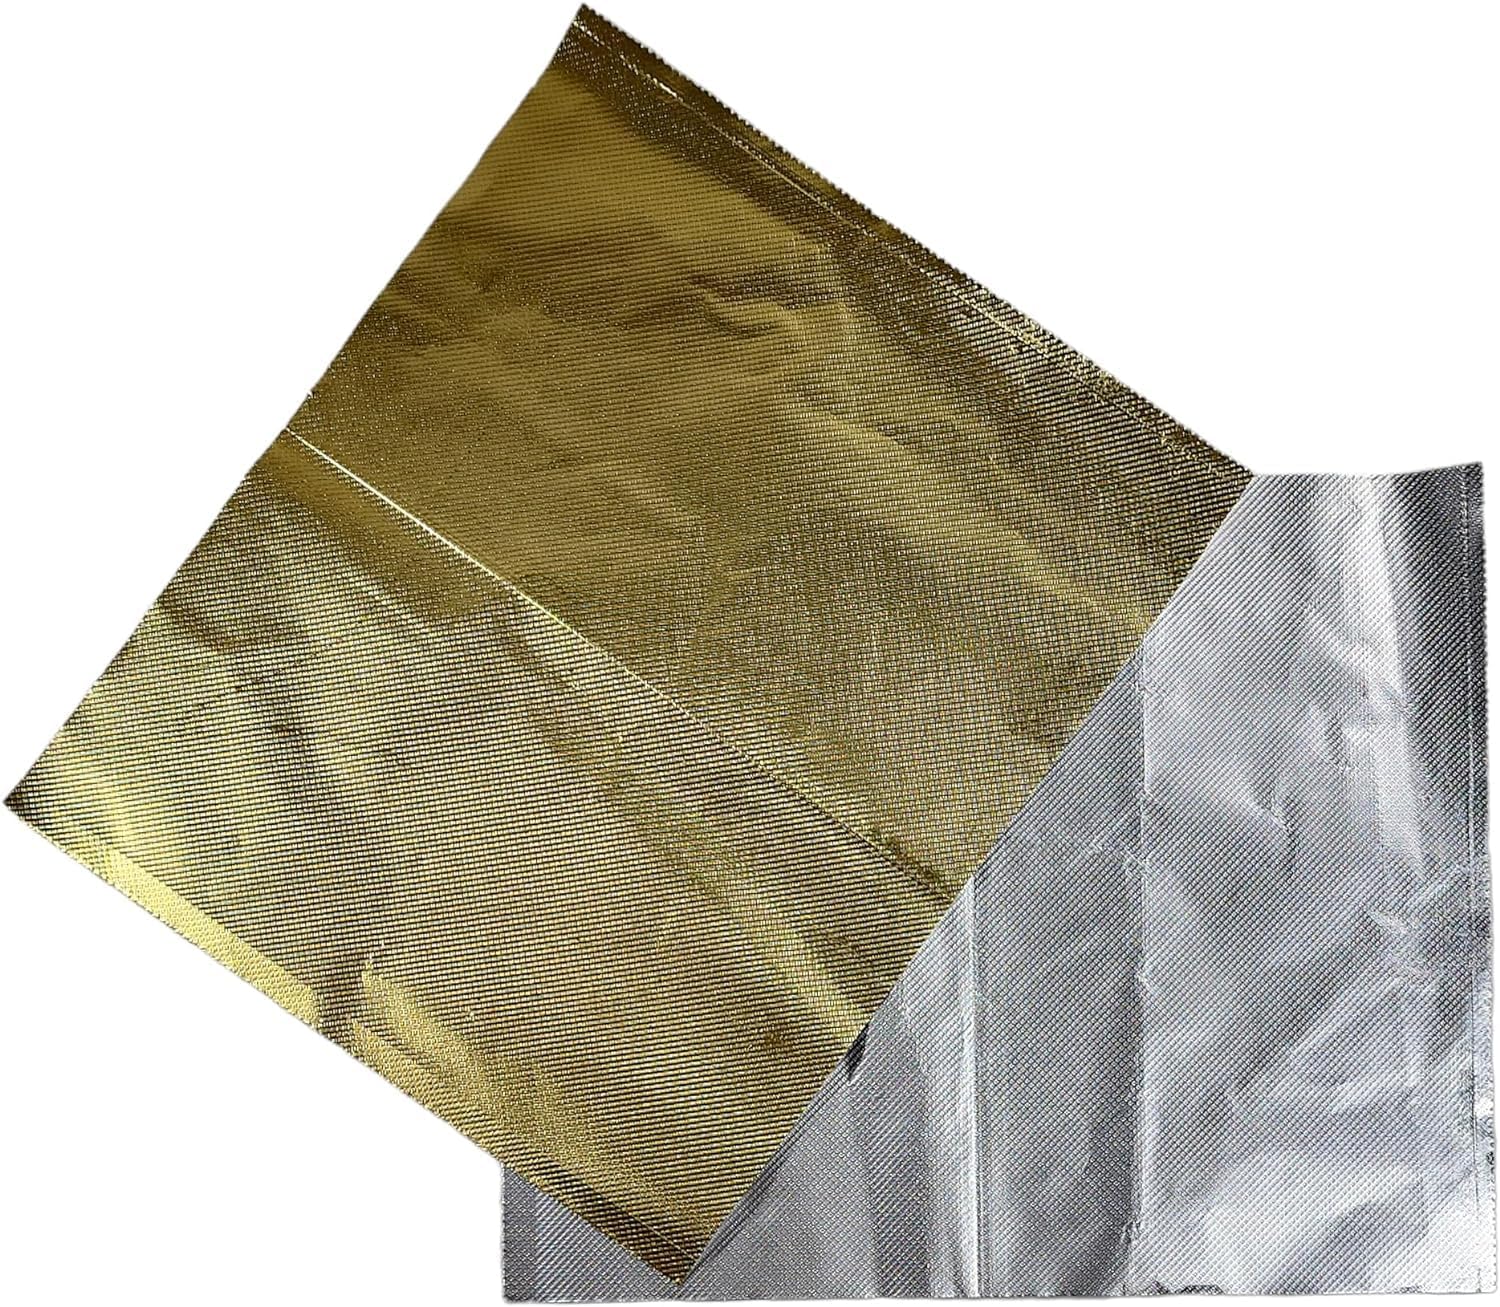 Pop-Up Interfolded Gold Aluminum Foil Sheets 9 x 10 3/4, 200/Box - 12  Boxes